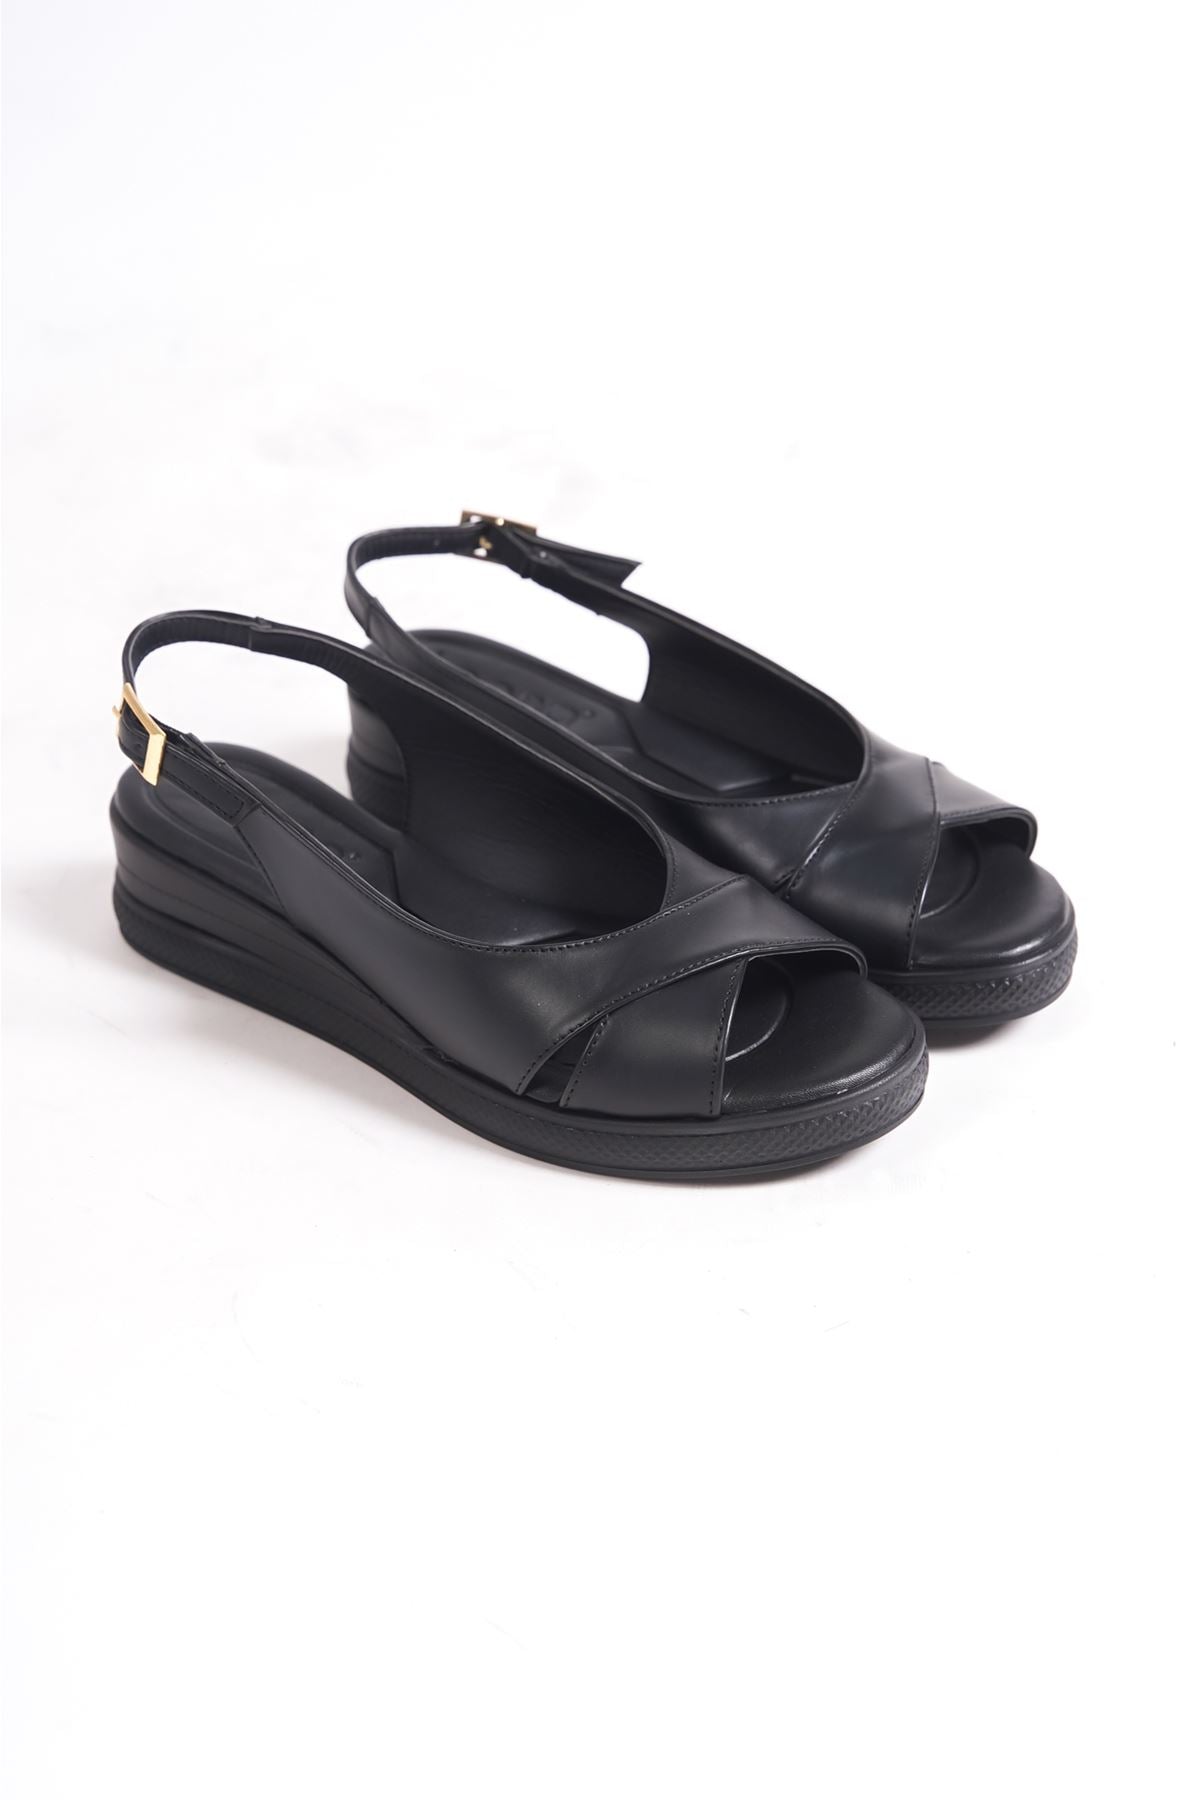 Adare Black Comfortable Women's Sandals - STREETMODE ™